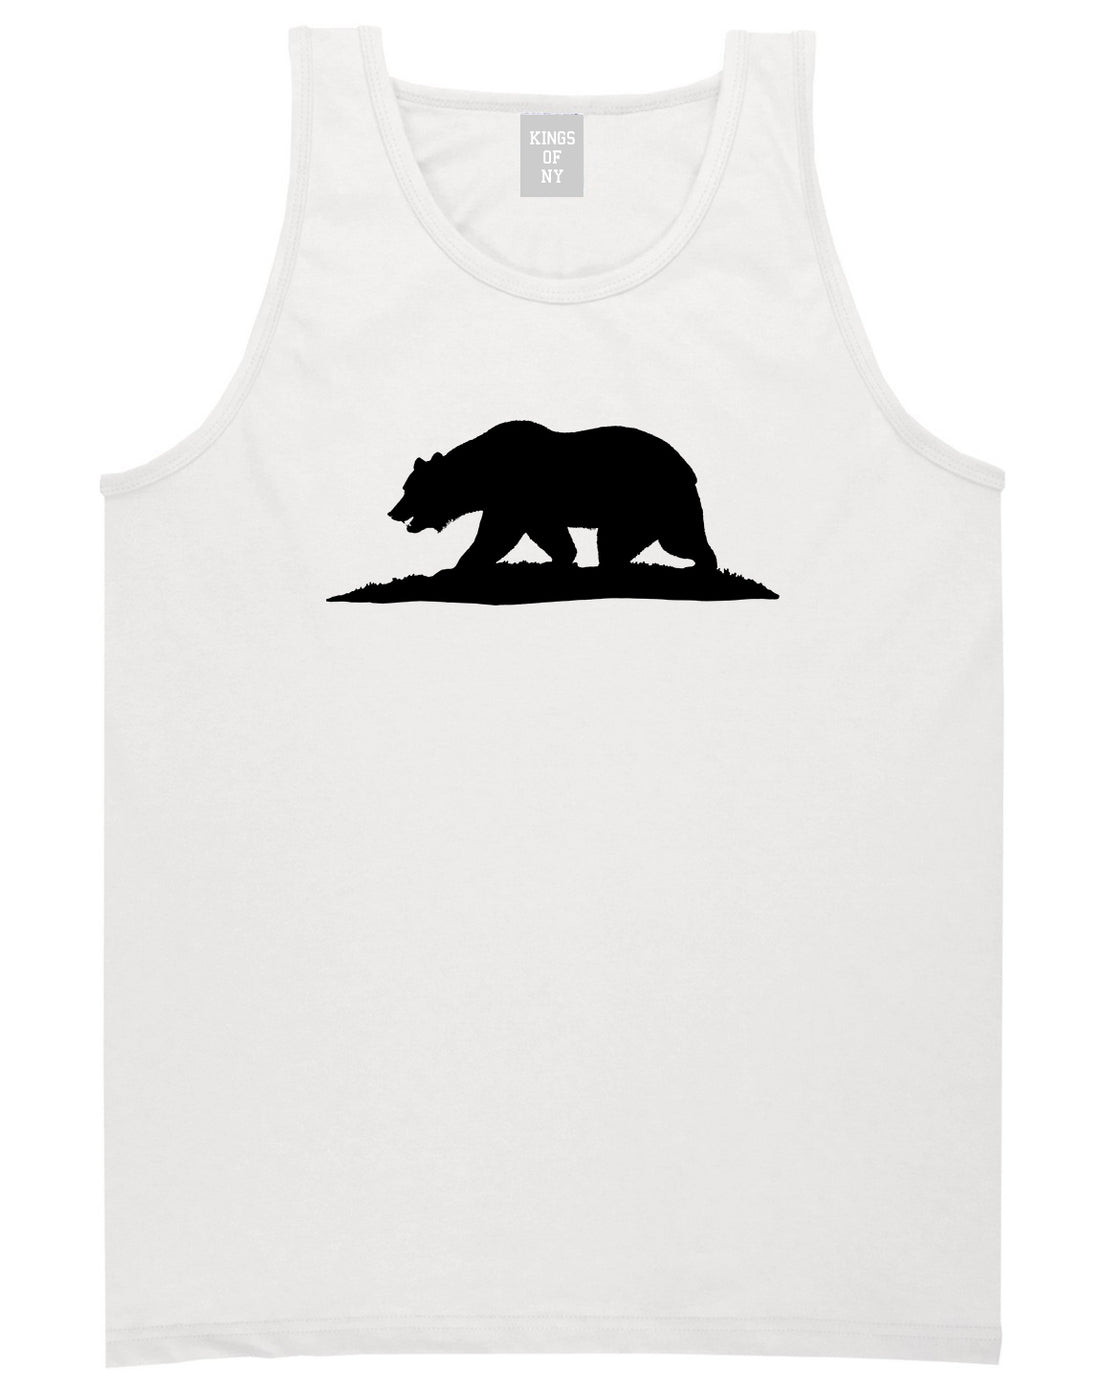 Bear Logo California Republic White Tank Top Shirt by Kings Of NY